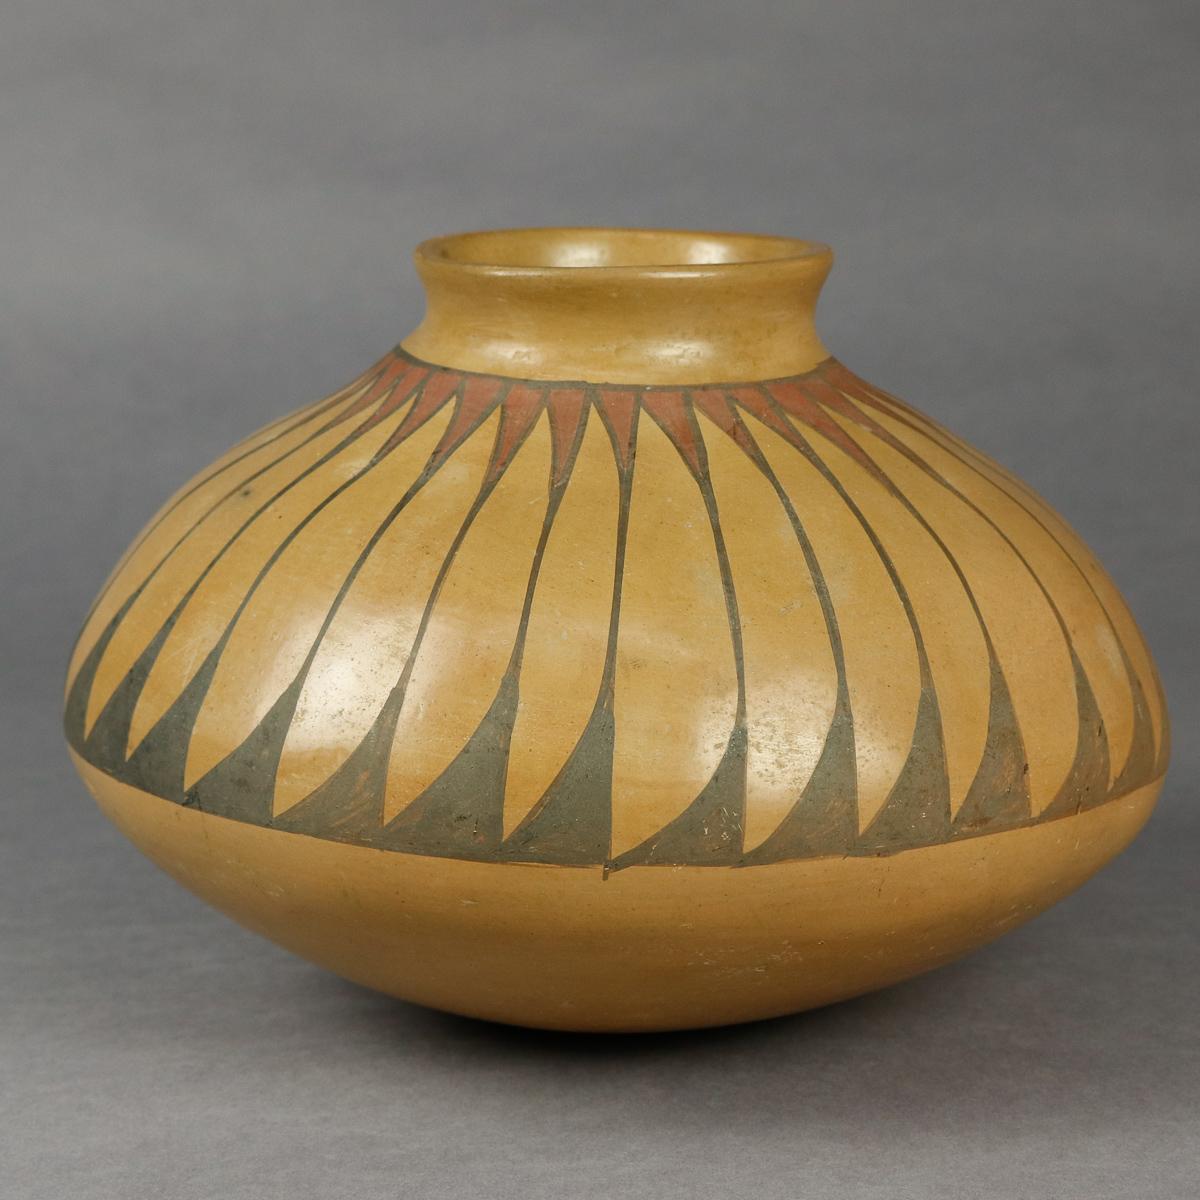 20th Century Southwest Native American Indian Acoma Stylized Feather Pottery Vase, circa 1900